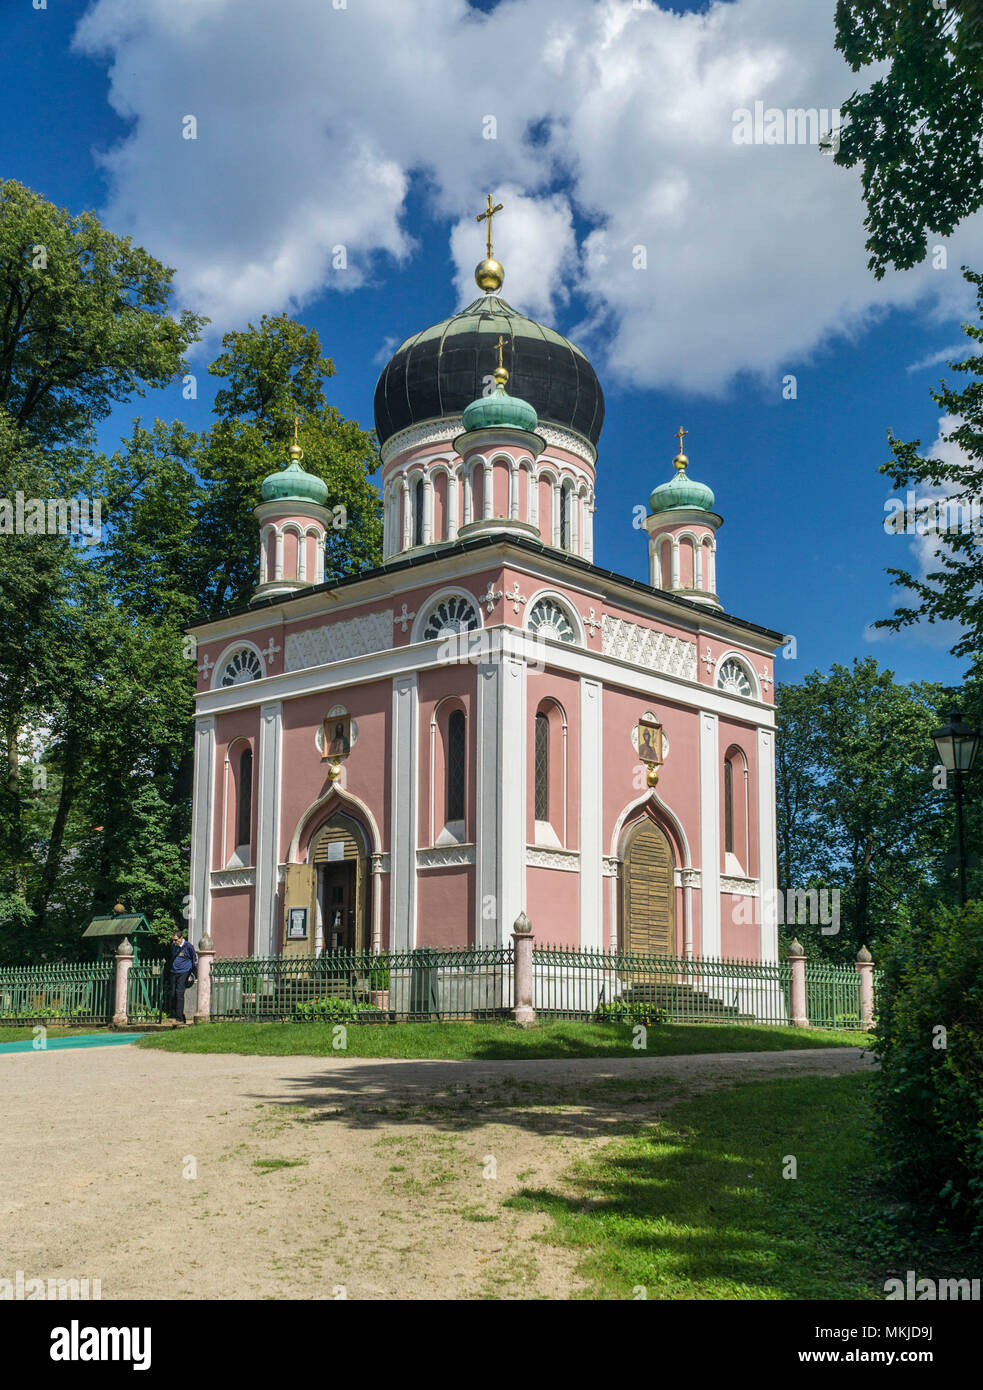 Alexander Nevsky cappella della colonia russa Alexandrowka, Potsdam, Alexander Newski Kapelle der russischen Kolonie Alexandrowka Foto Stock